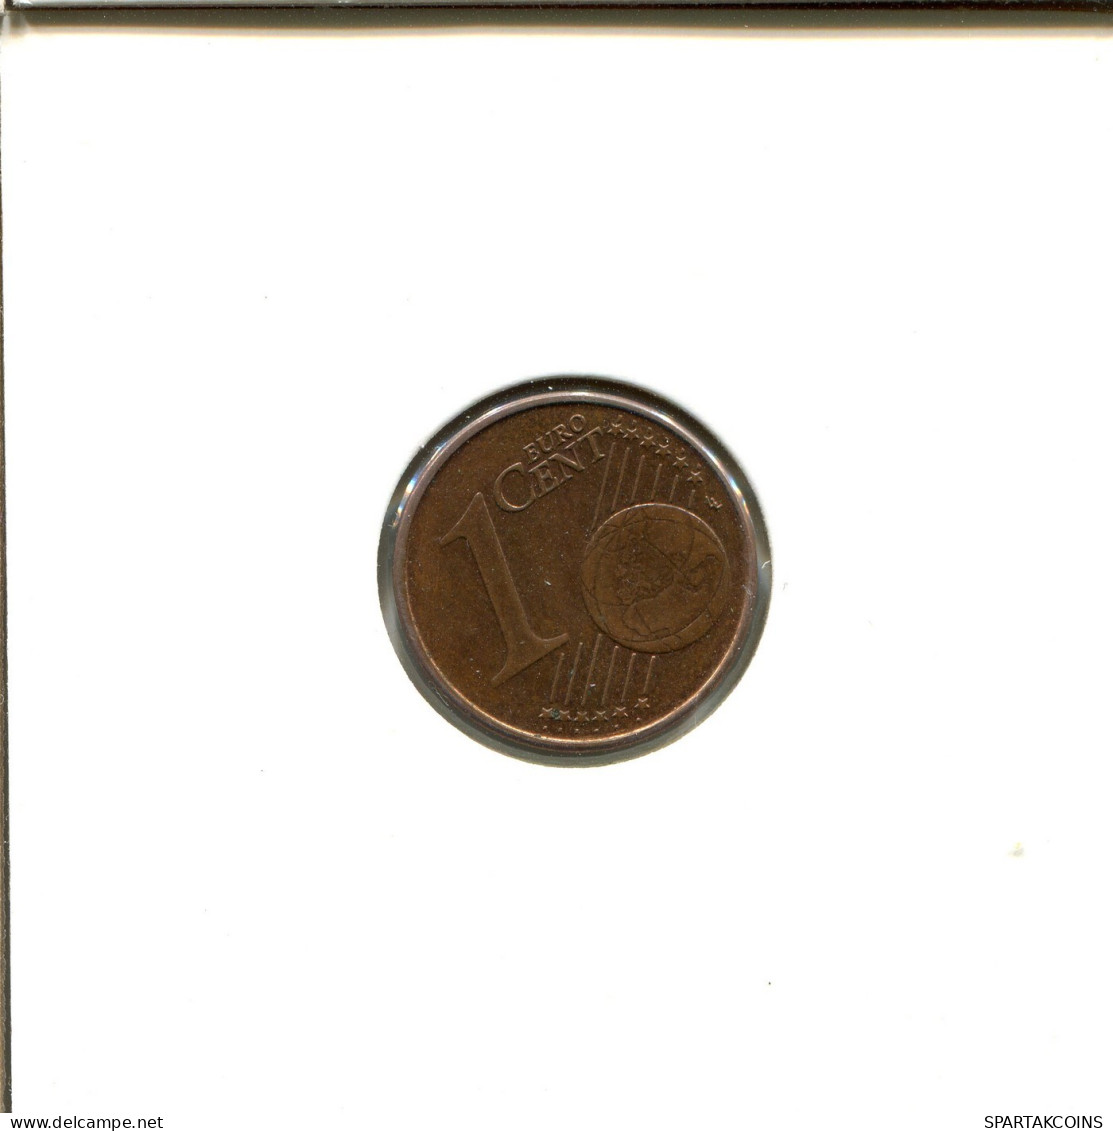 1 EURO CENT 2004 PORTUGAL Moneda #EU281.E.A - Portogallo